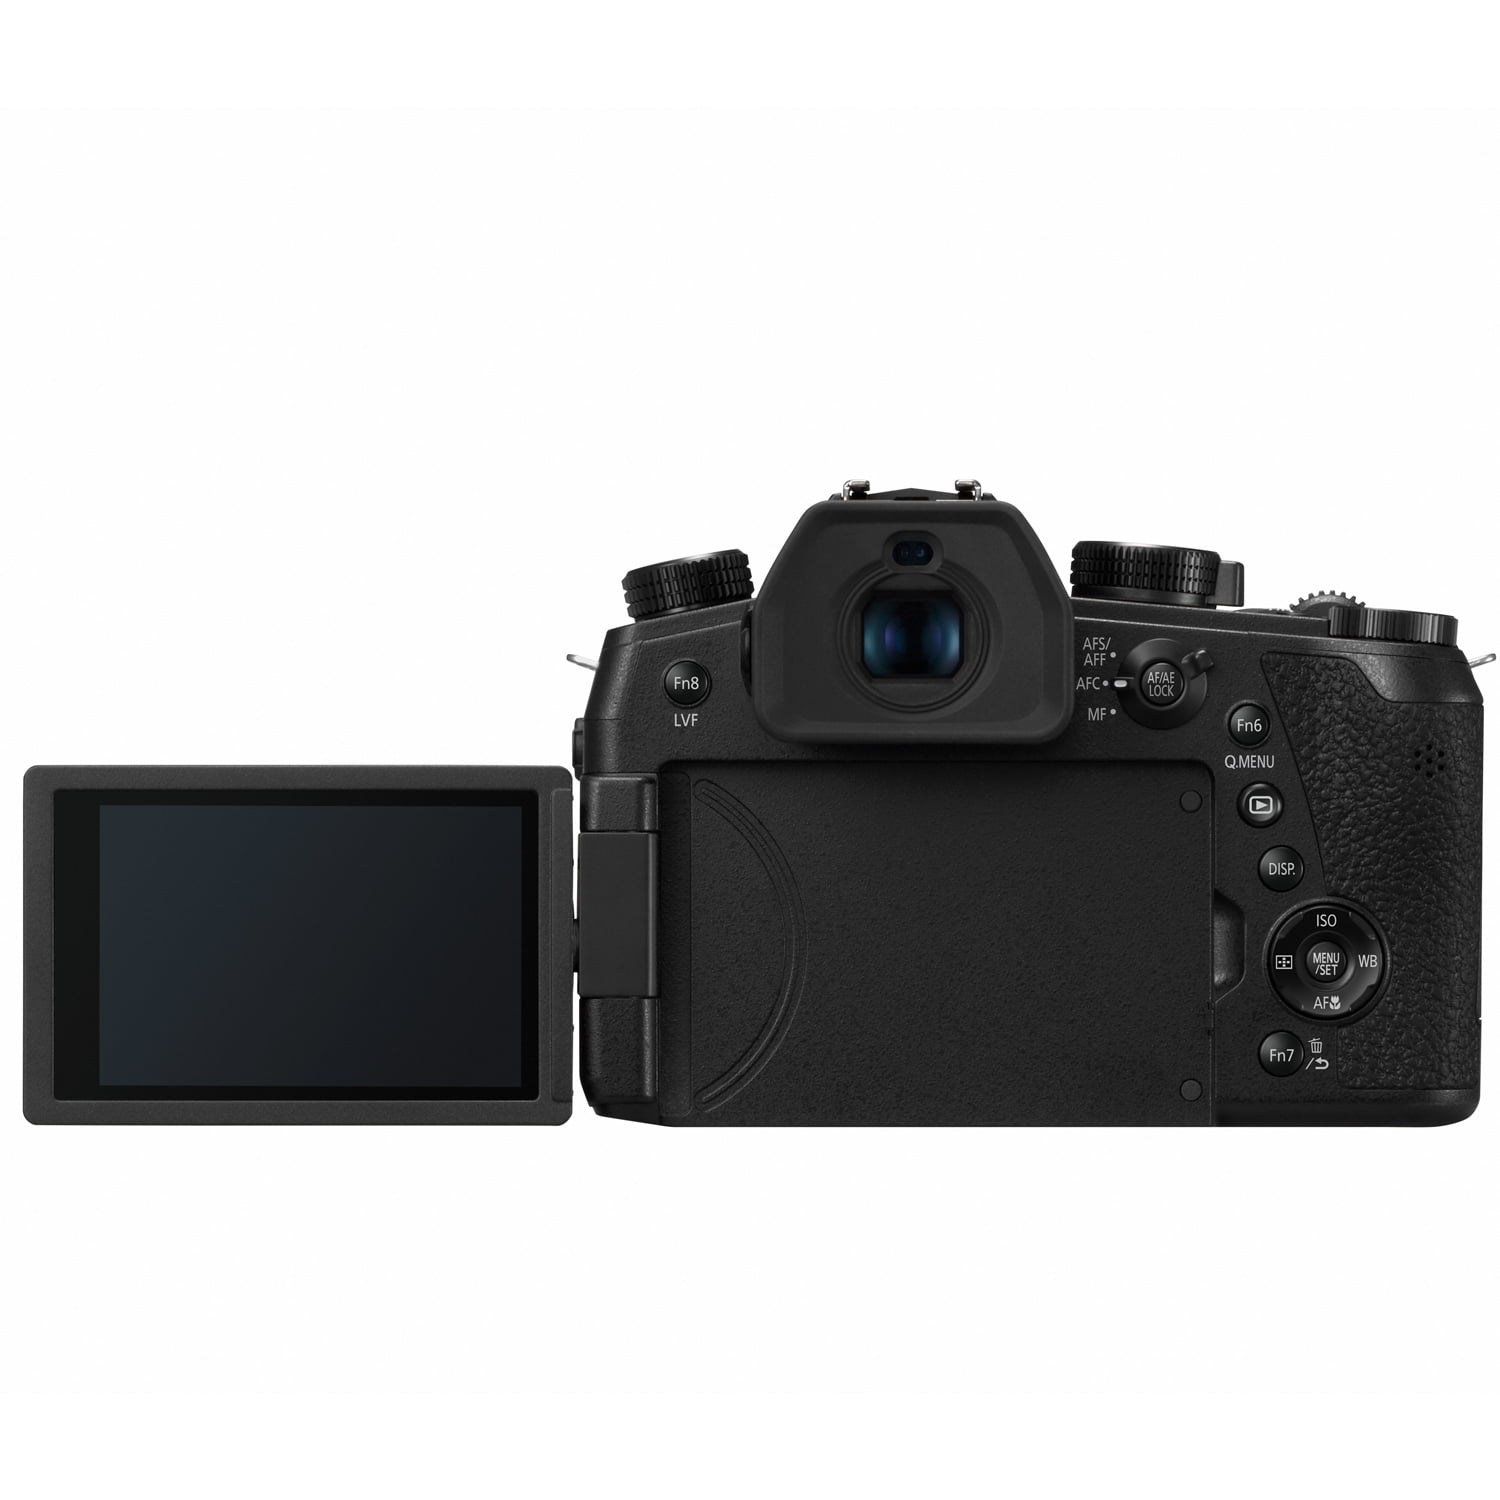 Panasonic Lumix DC-FZ1000 II Digital Camera - DC-FZ1000M2